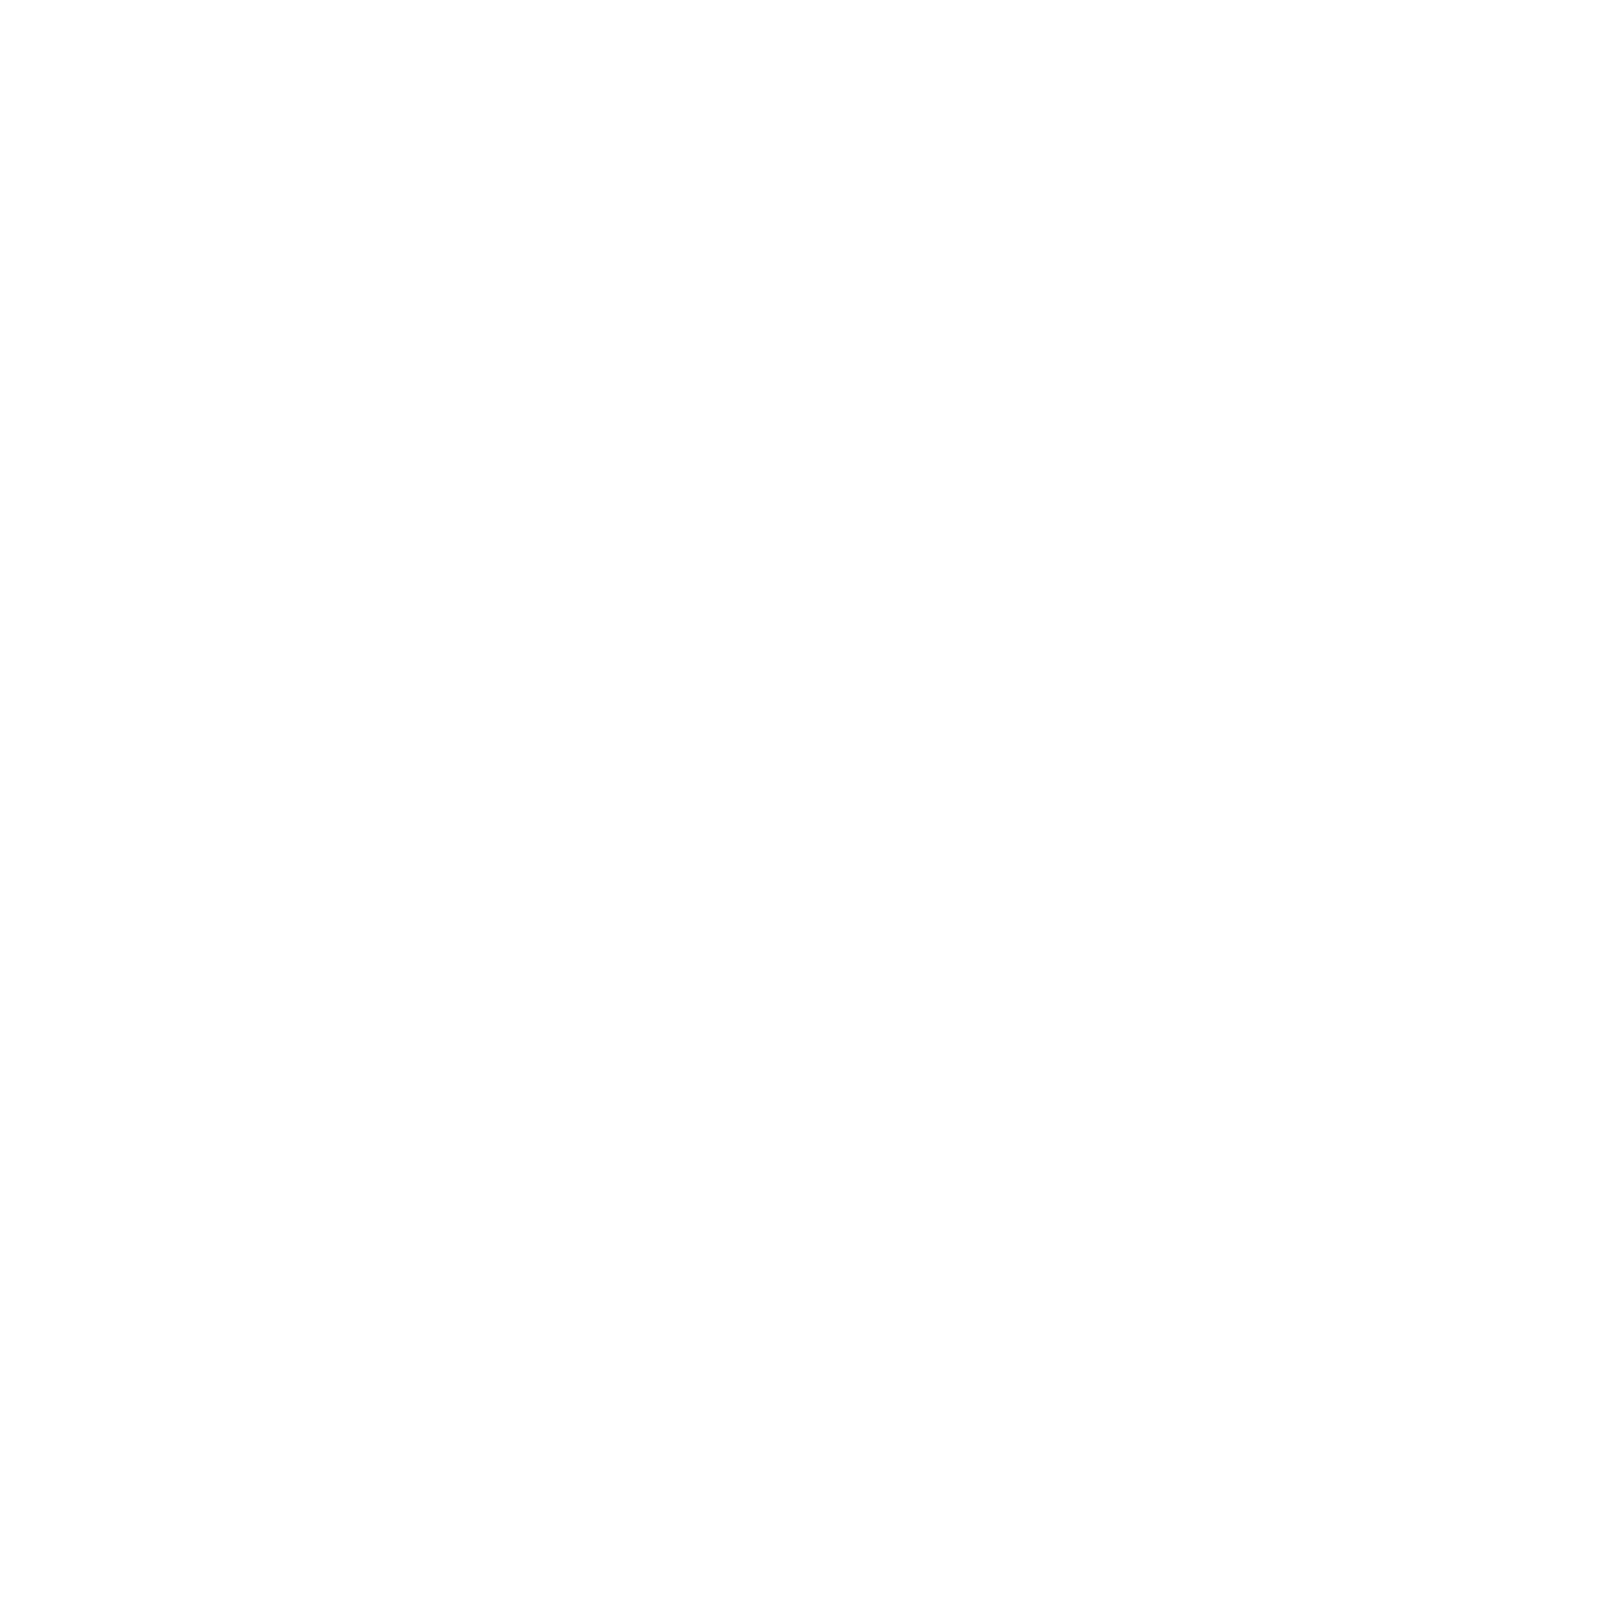 Charles Sturt University logo on a transparent backdrop.